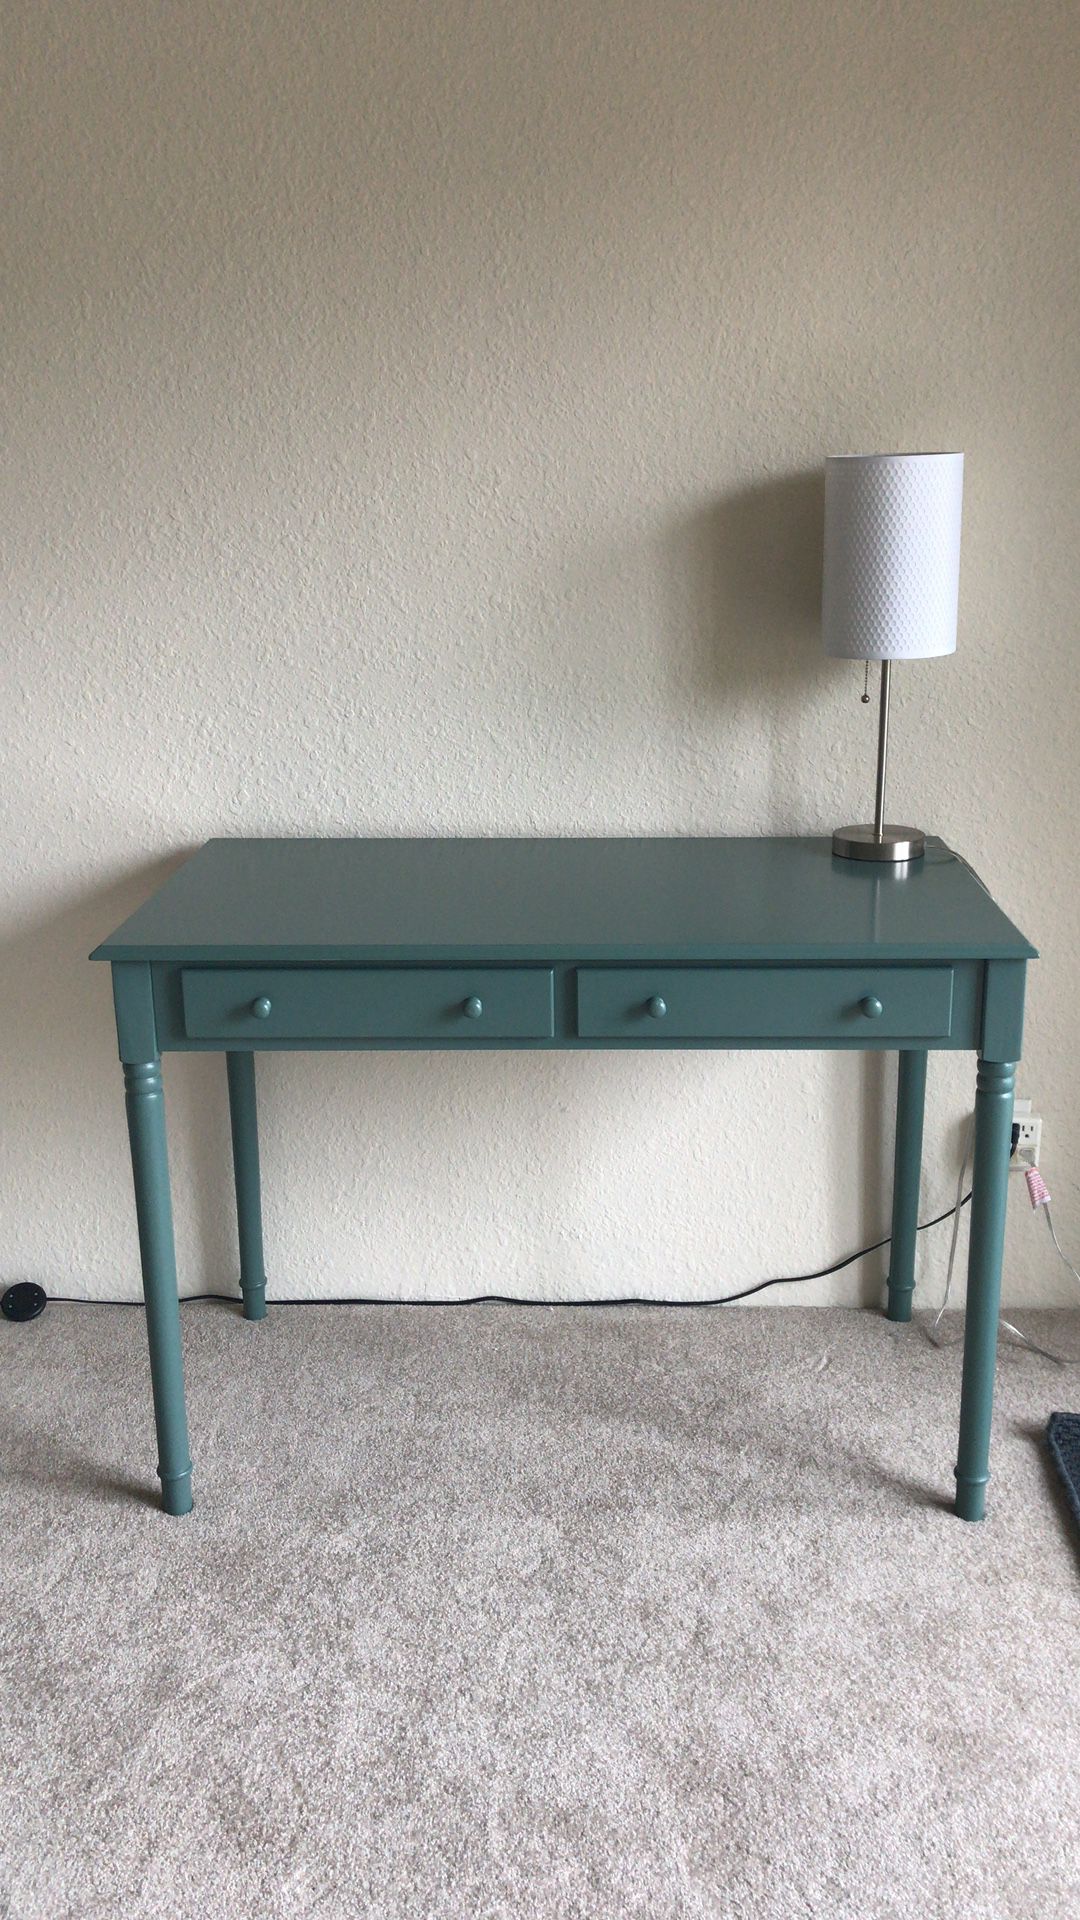 2 drawer writing desk - Agate green/teal